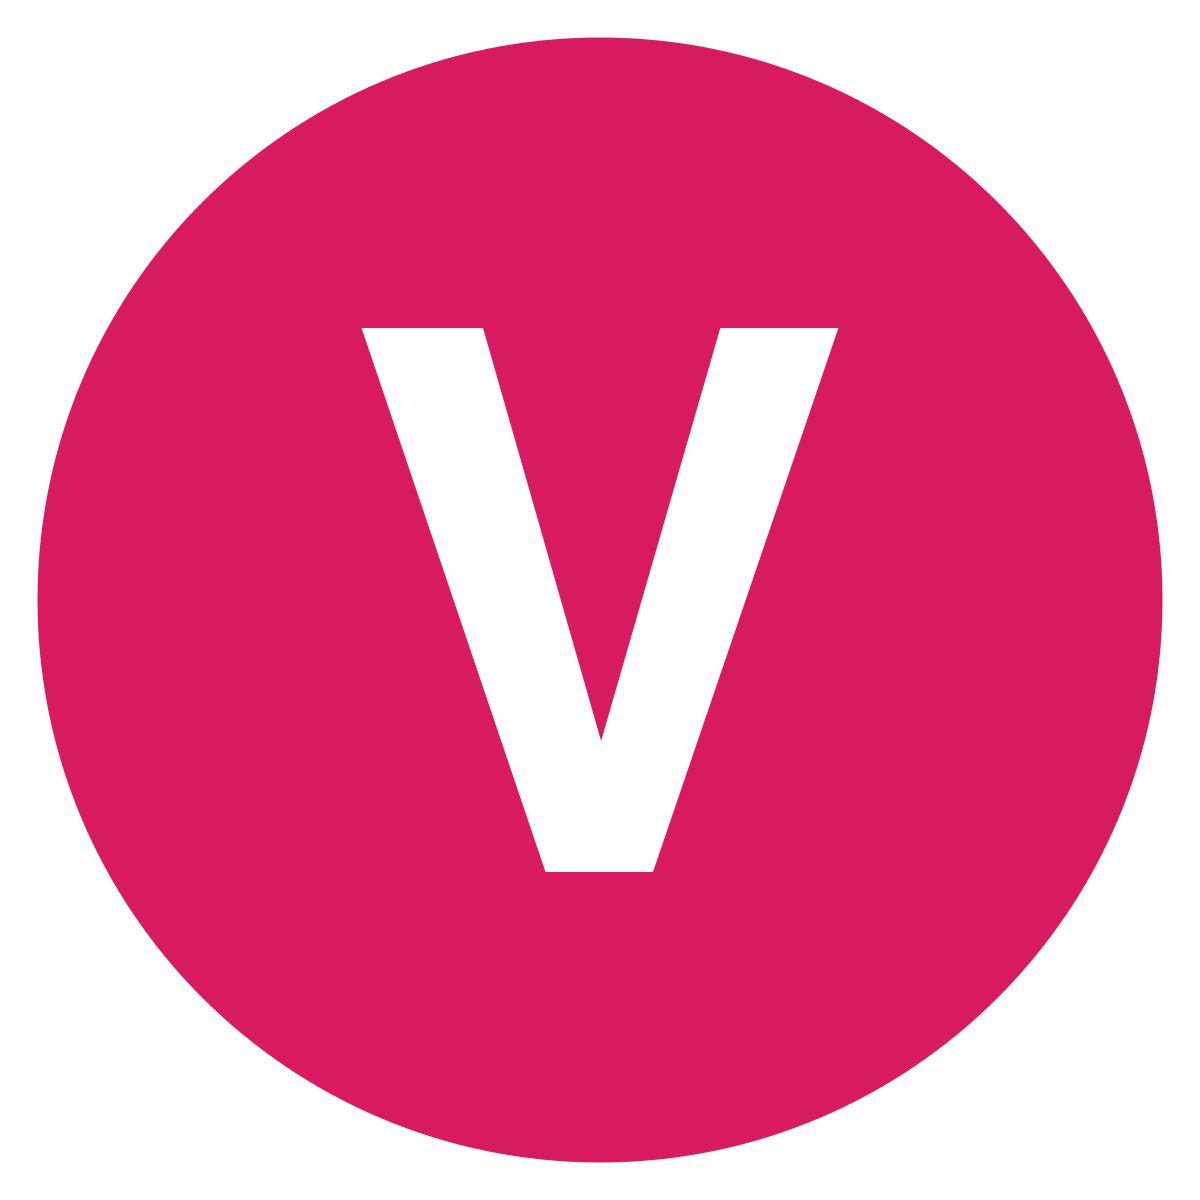 File:Eo circle pink white letter-v.svg - Wikimedia Commons